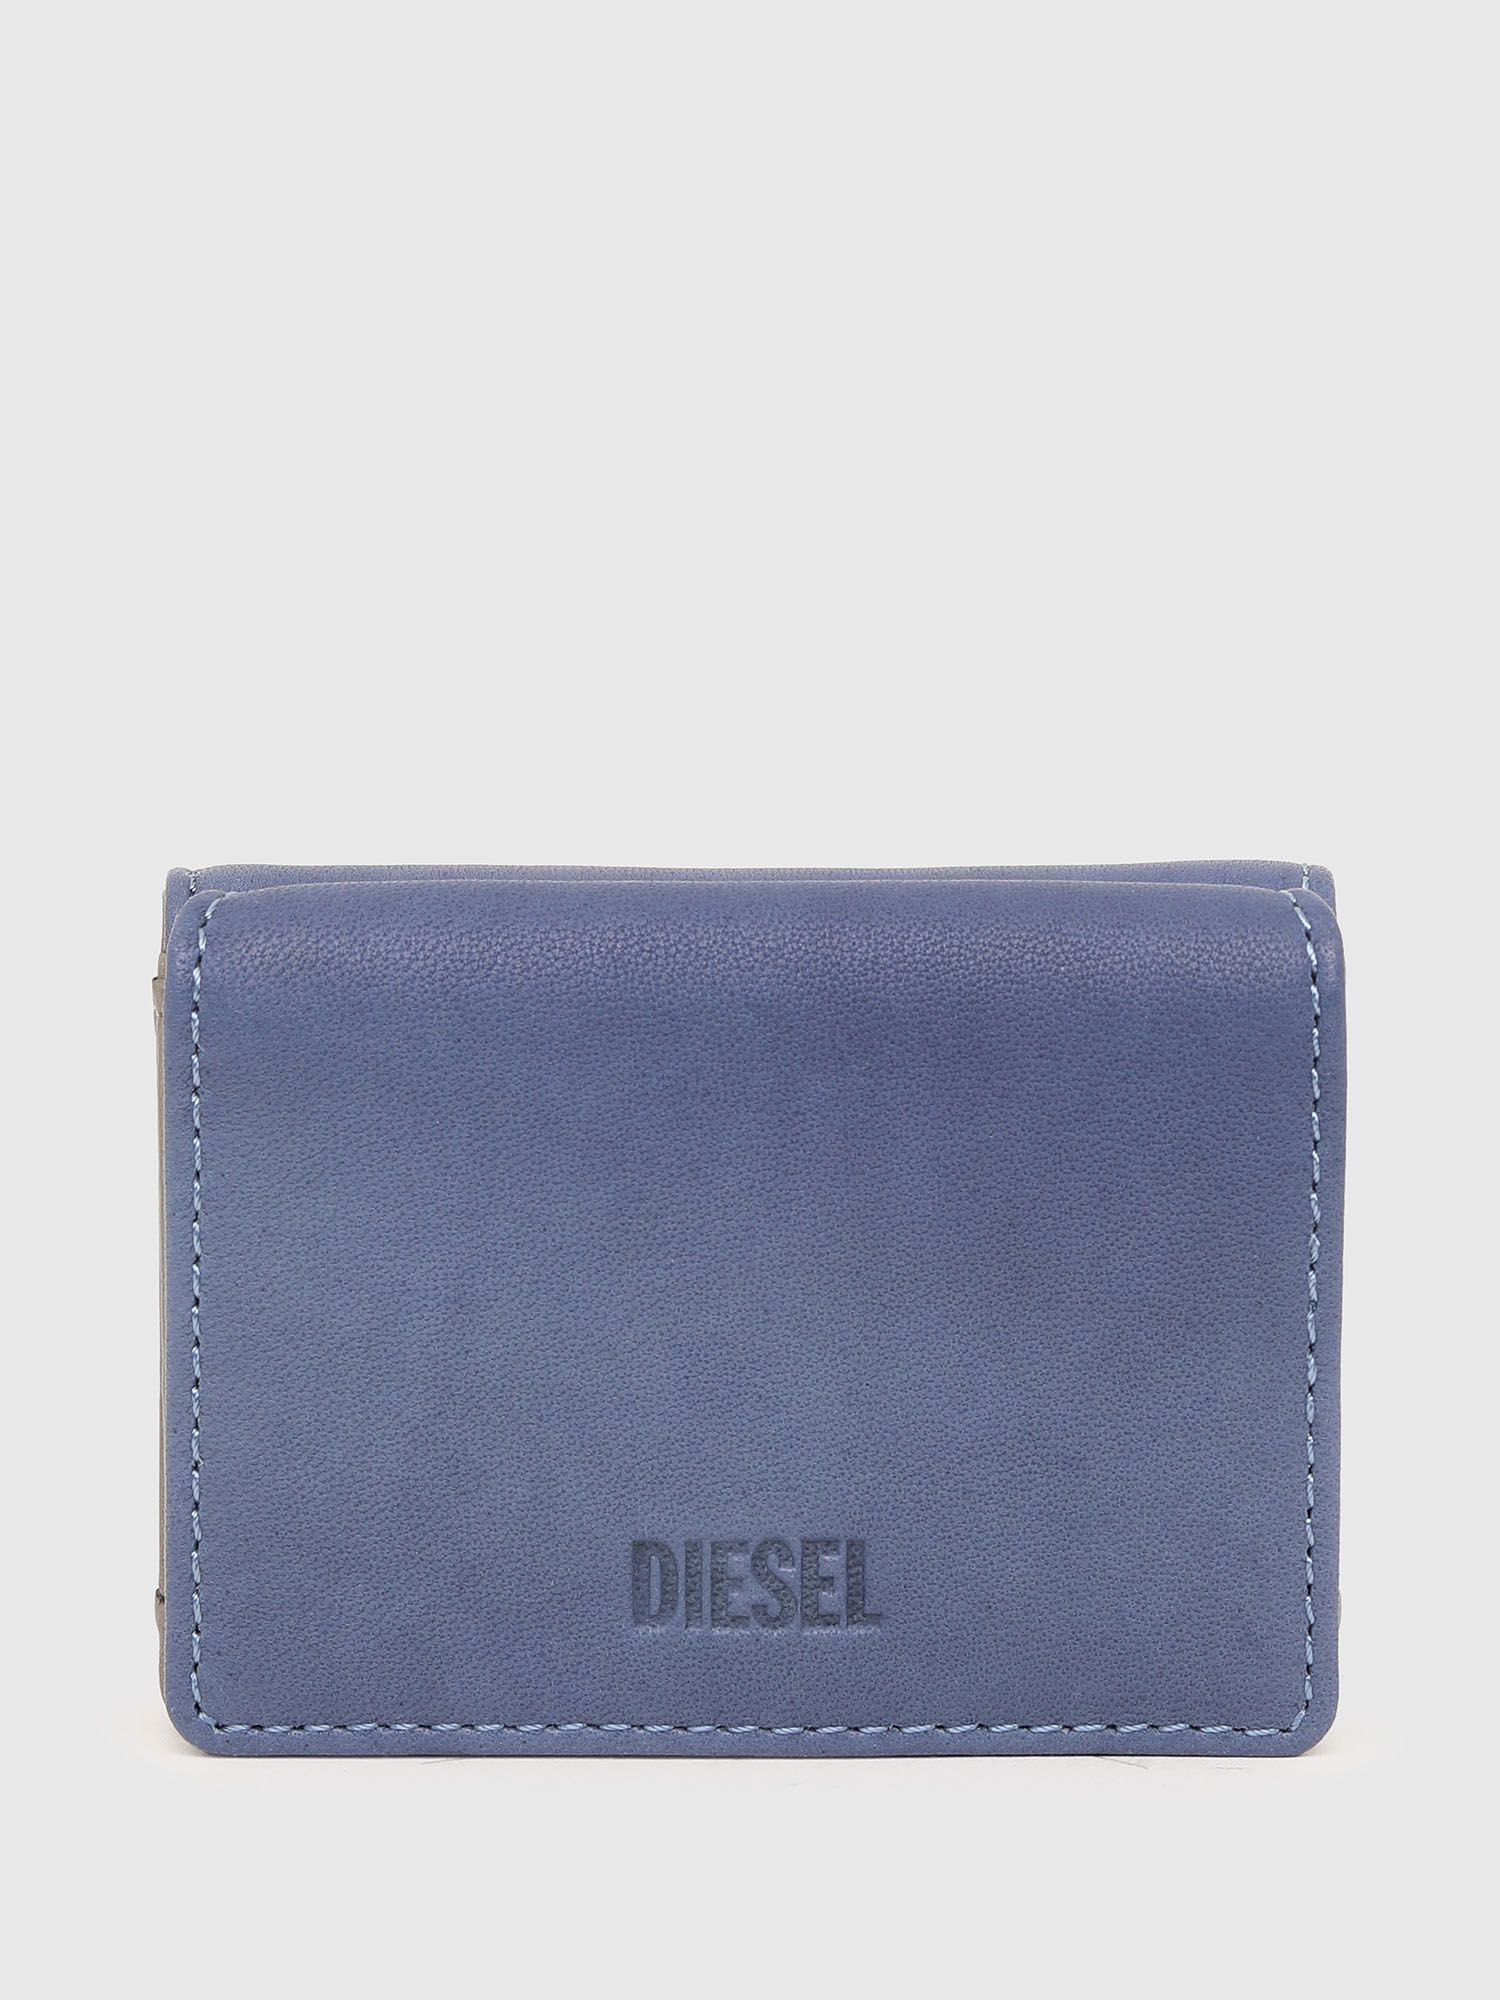 Diesel Wallet - DENIMFACE LORETTINA wallet blue